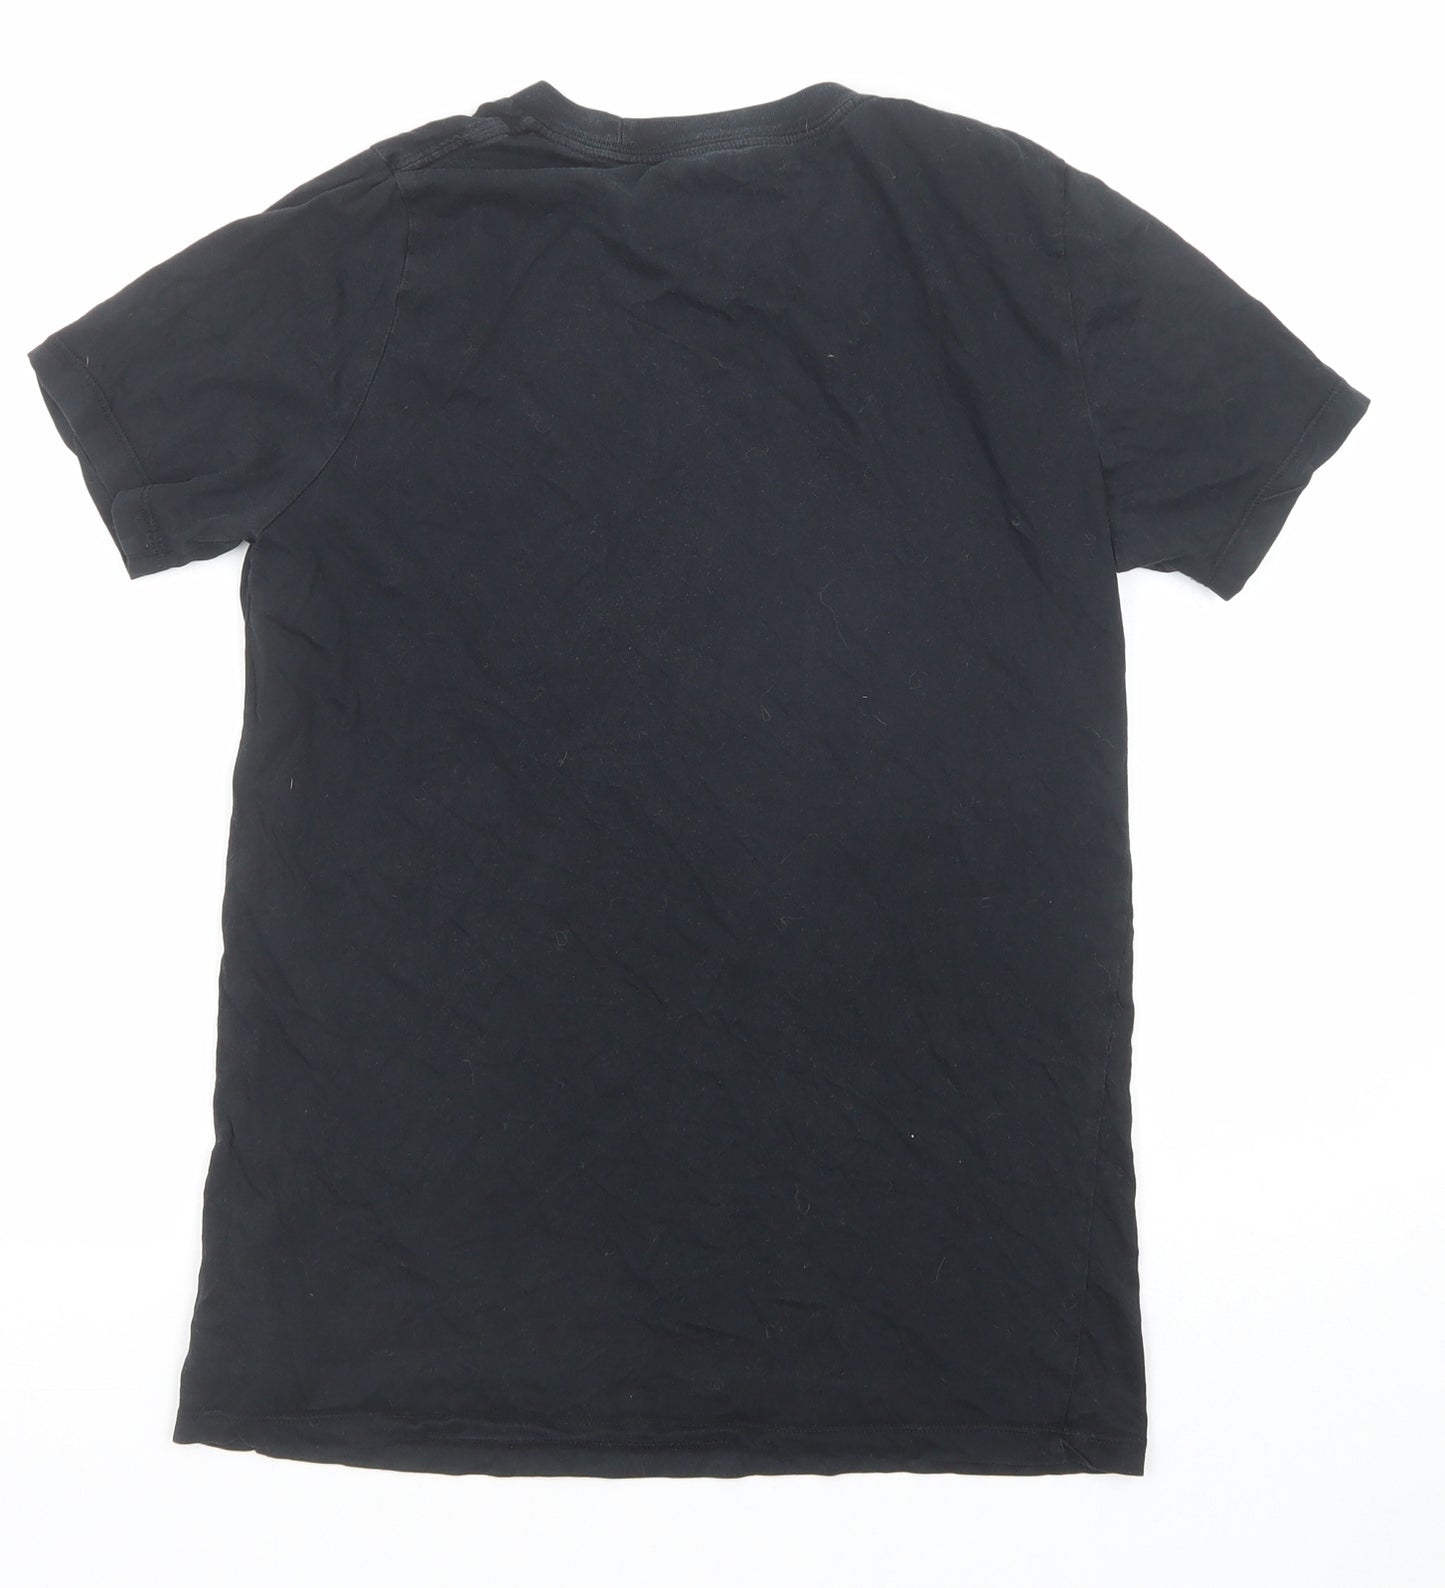 Converse Womens Black Cotton Basic T-Shirt Size M Crew Neck